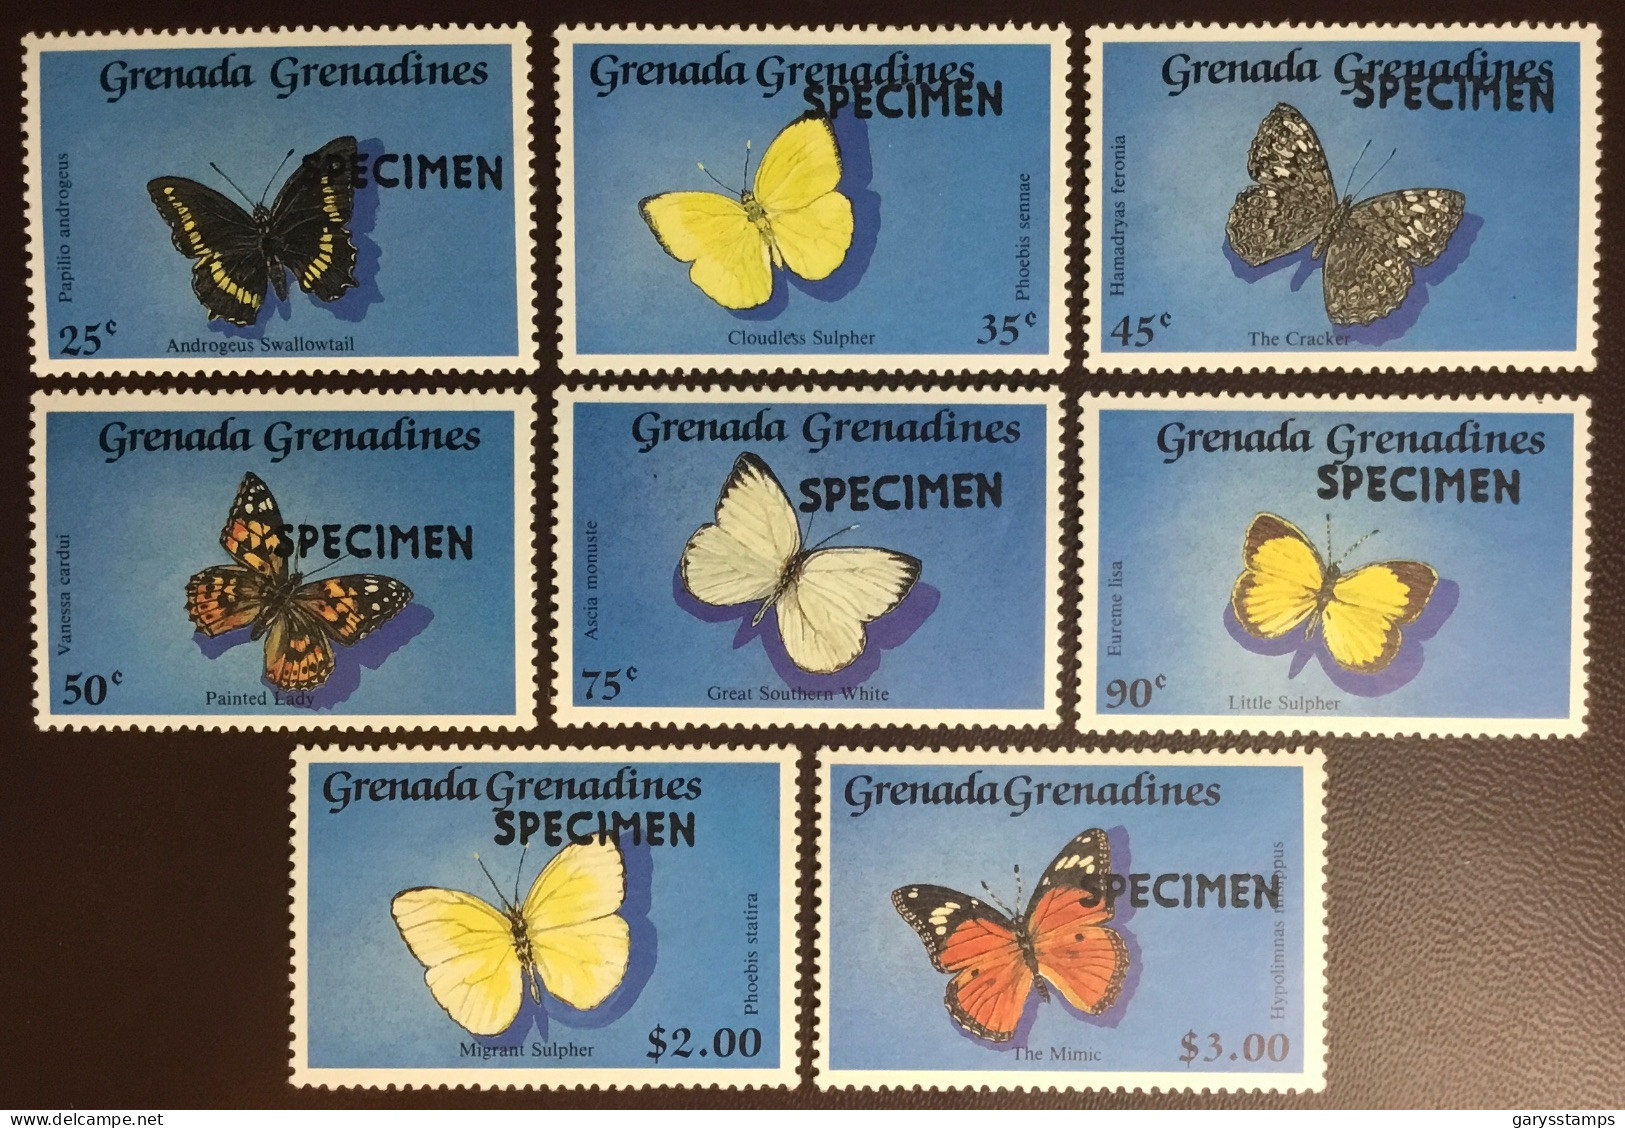 Grenada Grenadines 1989 Butterflies Specimen MNH - Schmetterlinge